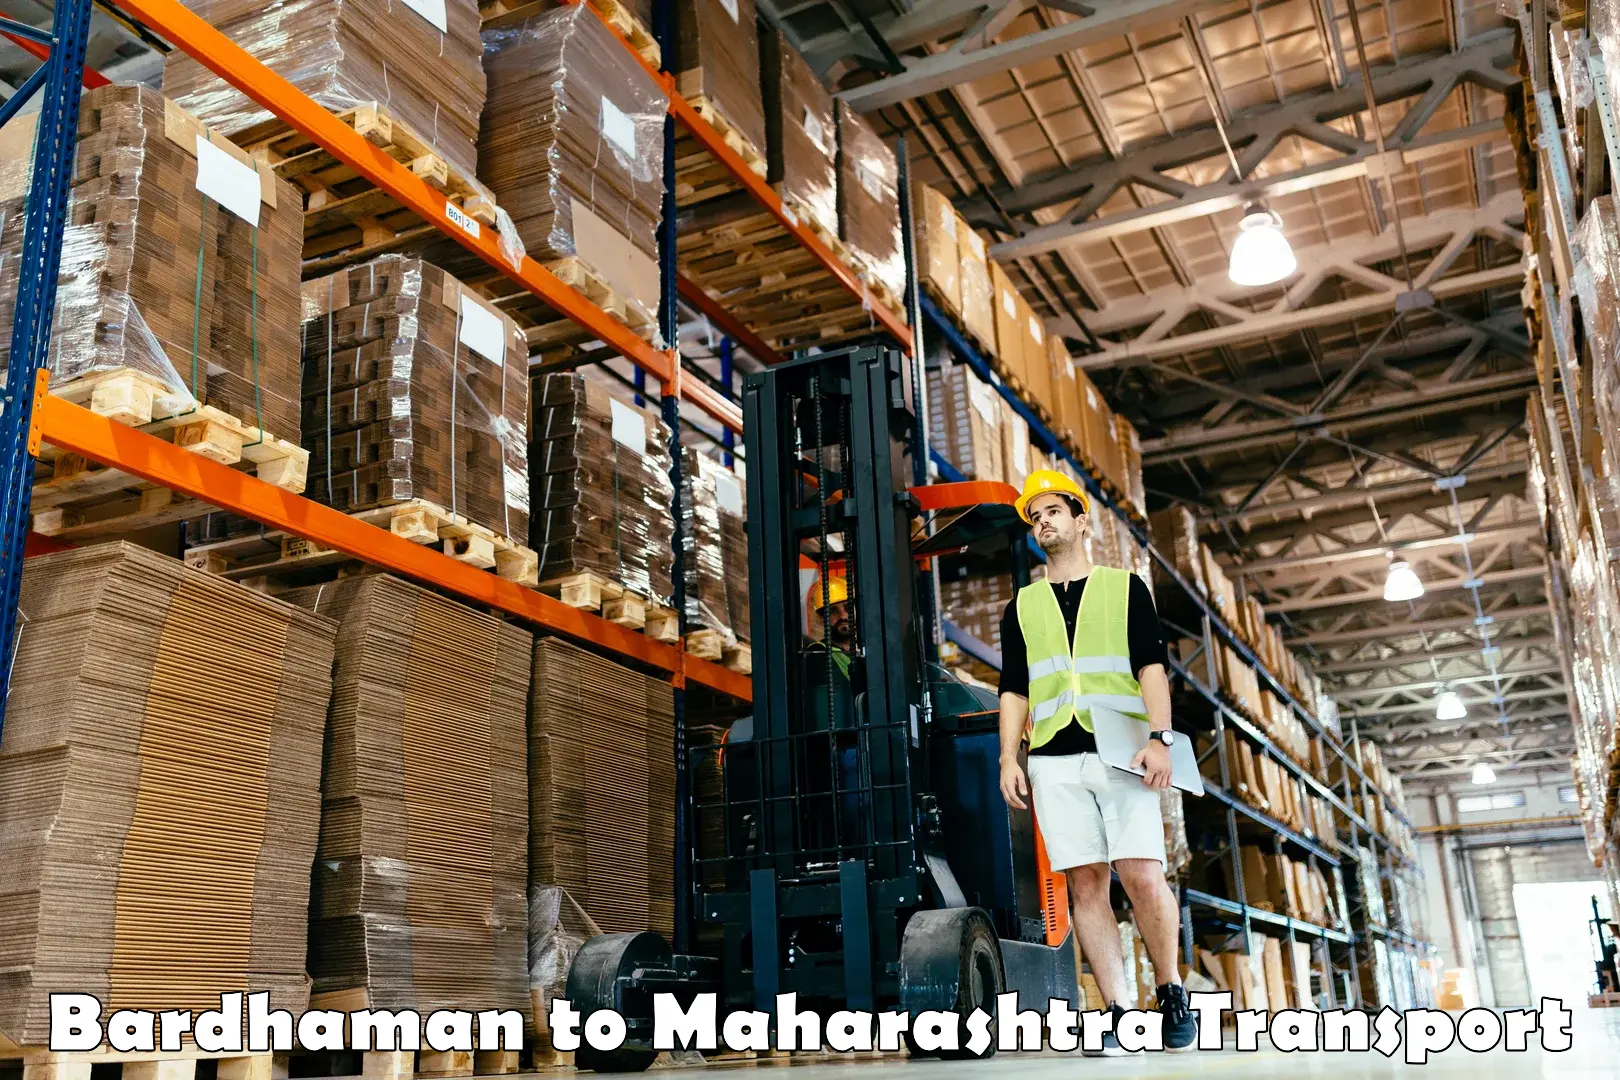 Truck transport companies in India Bardhaman to Mahim